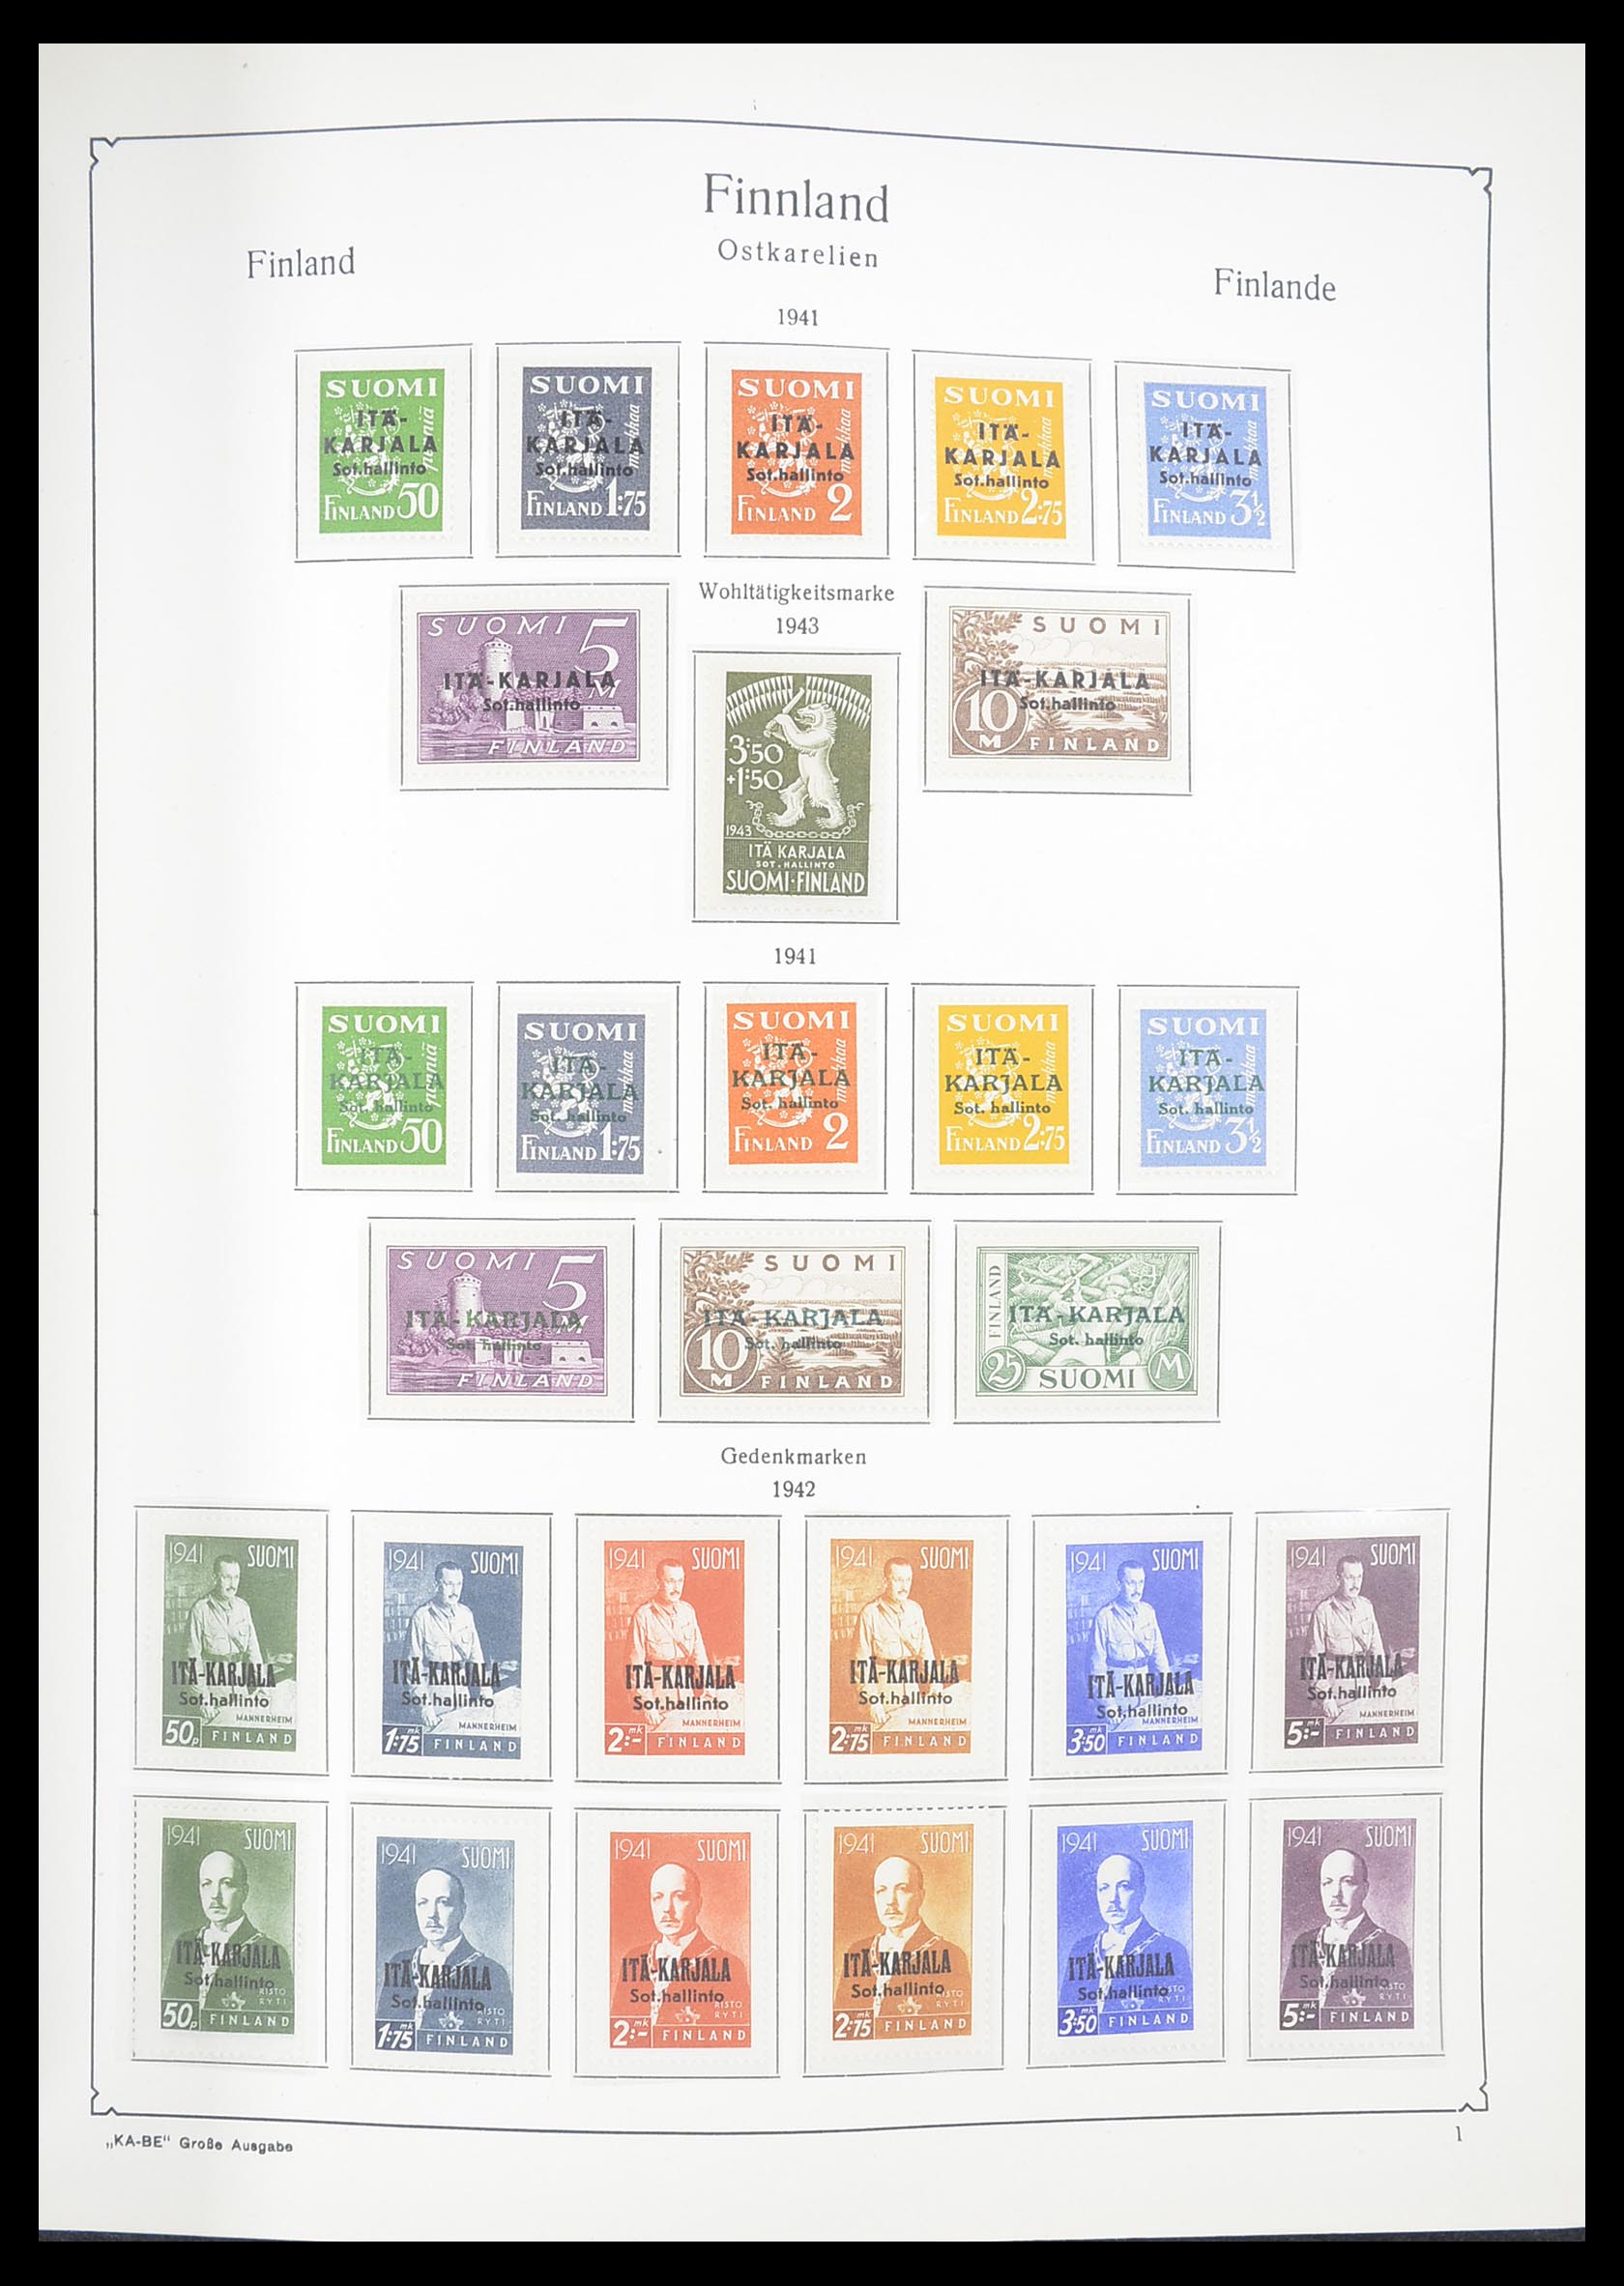 33379 060 - Stamp collection 33379 Scandinavia 1856-1972.